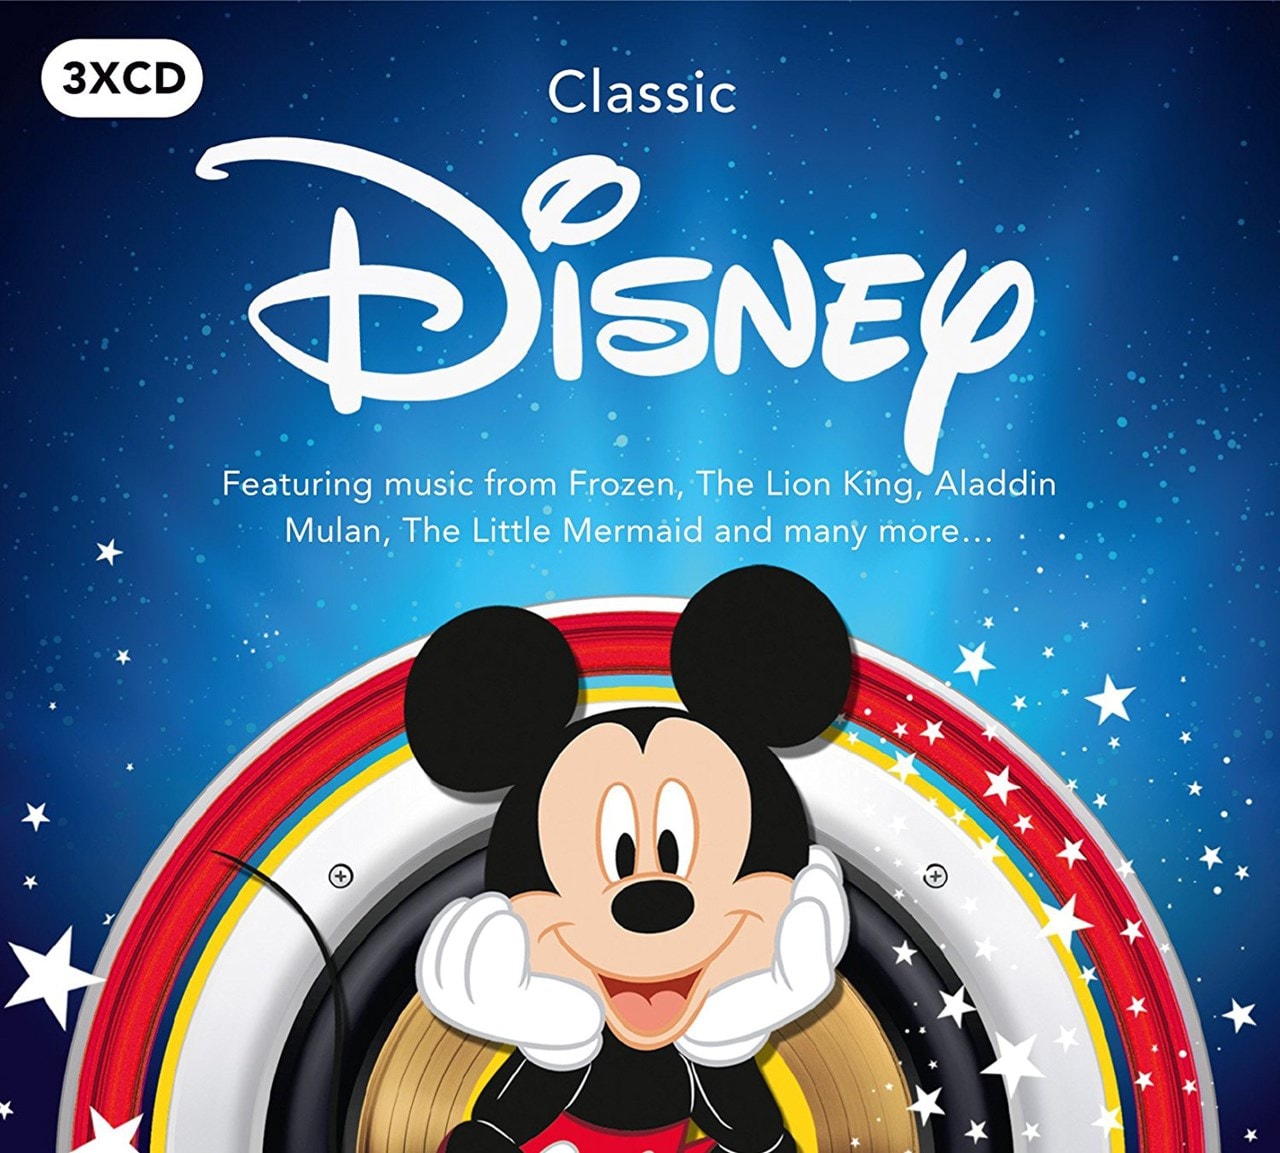  Classic  Disney  CD Album Free shipping over 20 HMV Store